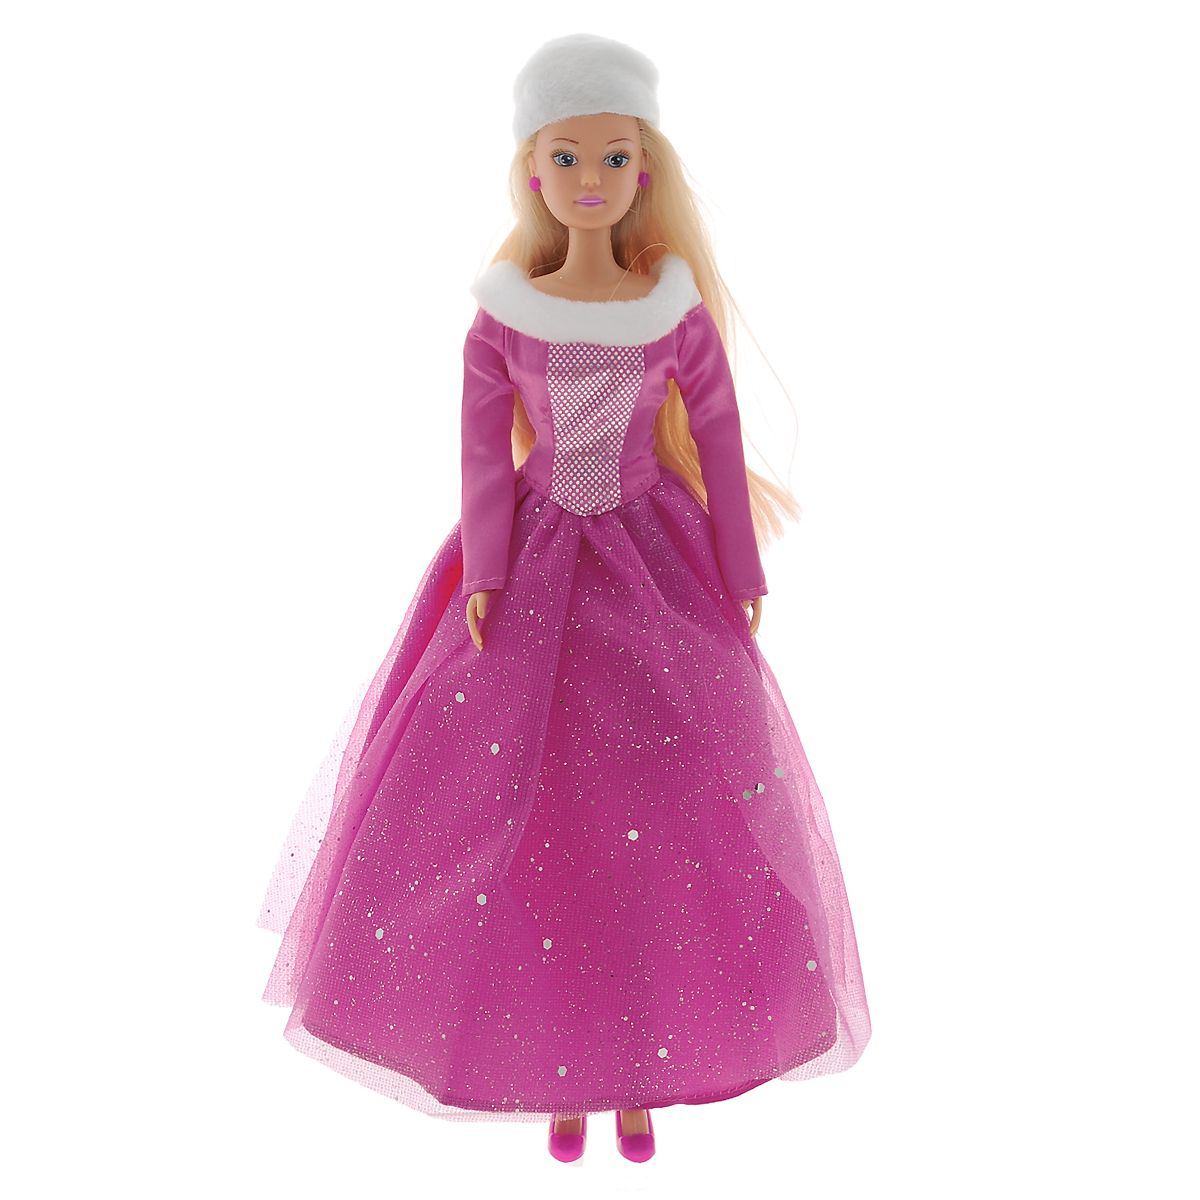 Кукла Штеффи Зимняя принцесса в розовом платье, 29 см